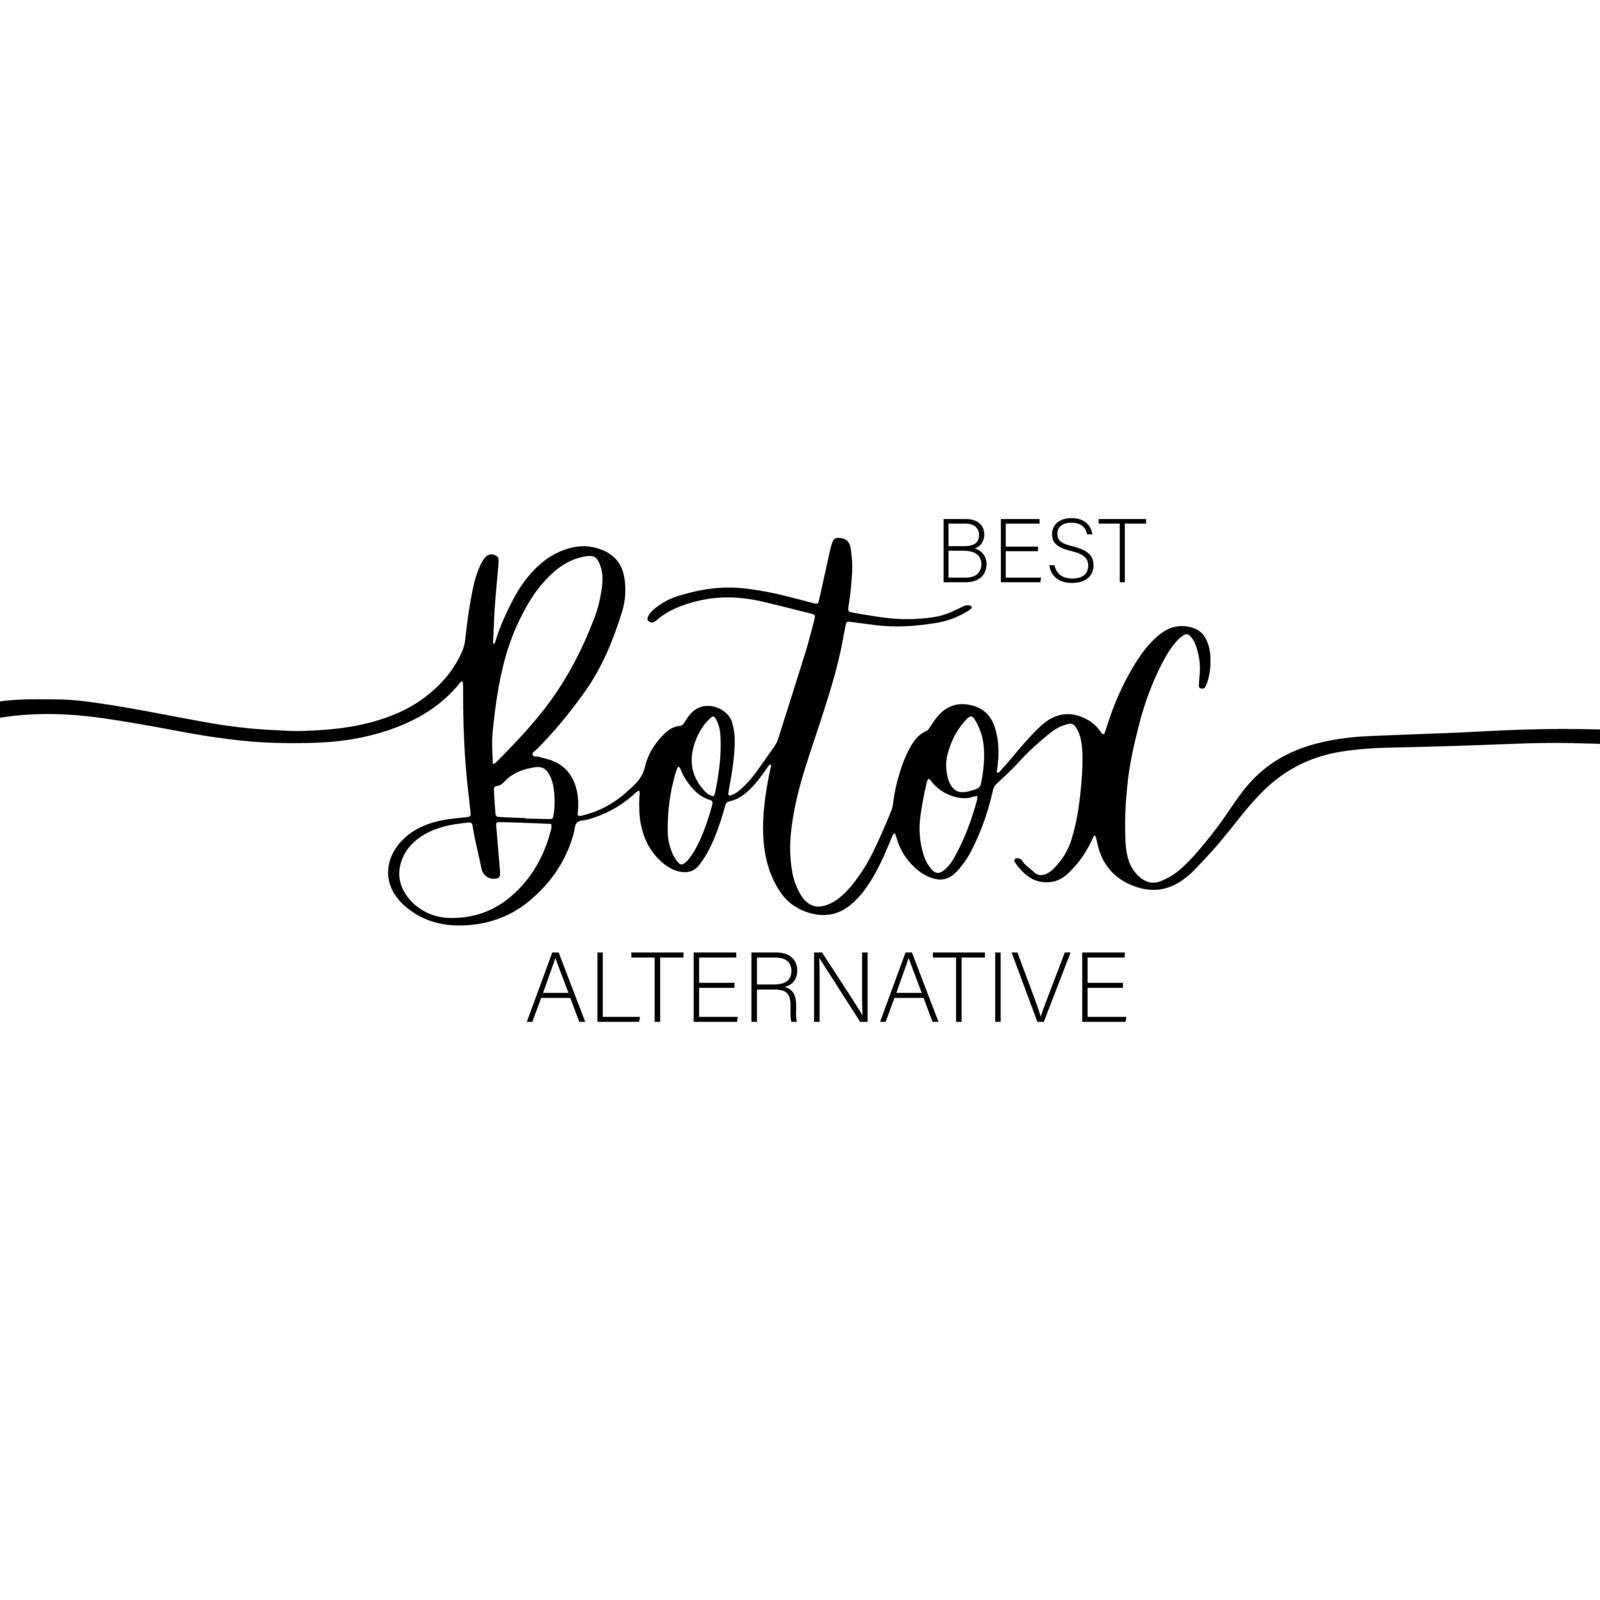 Best Botox alternative - hand drawn calligraphy inscription.